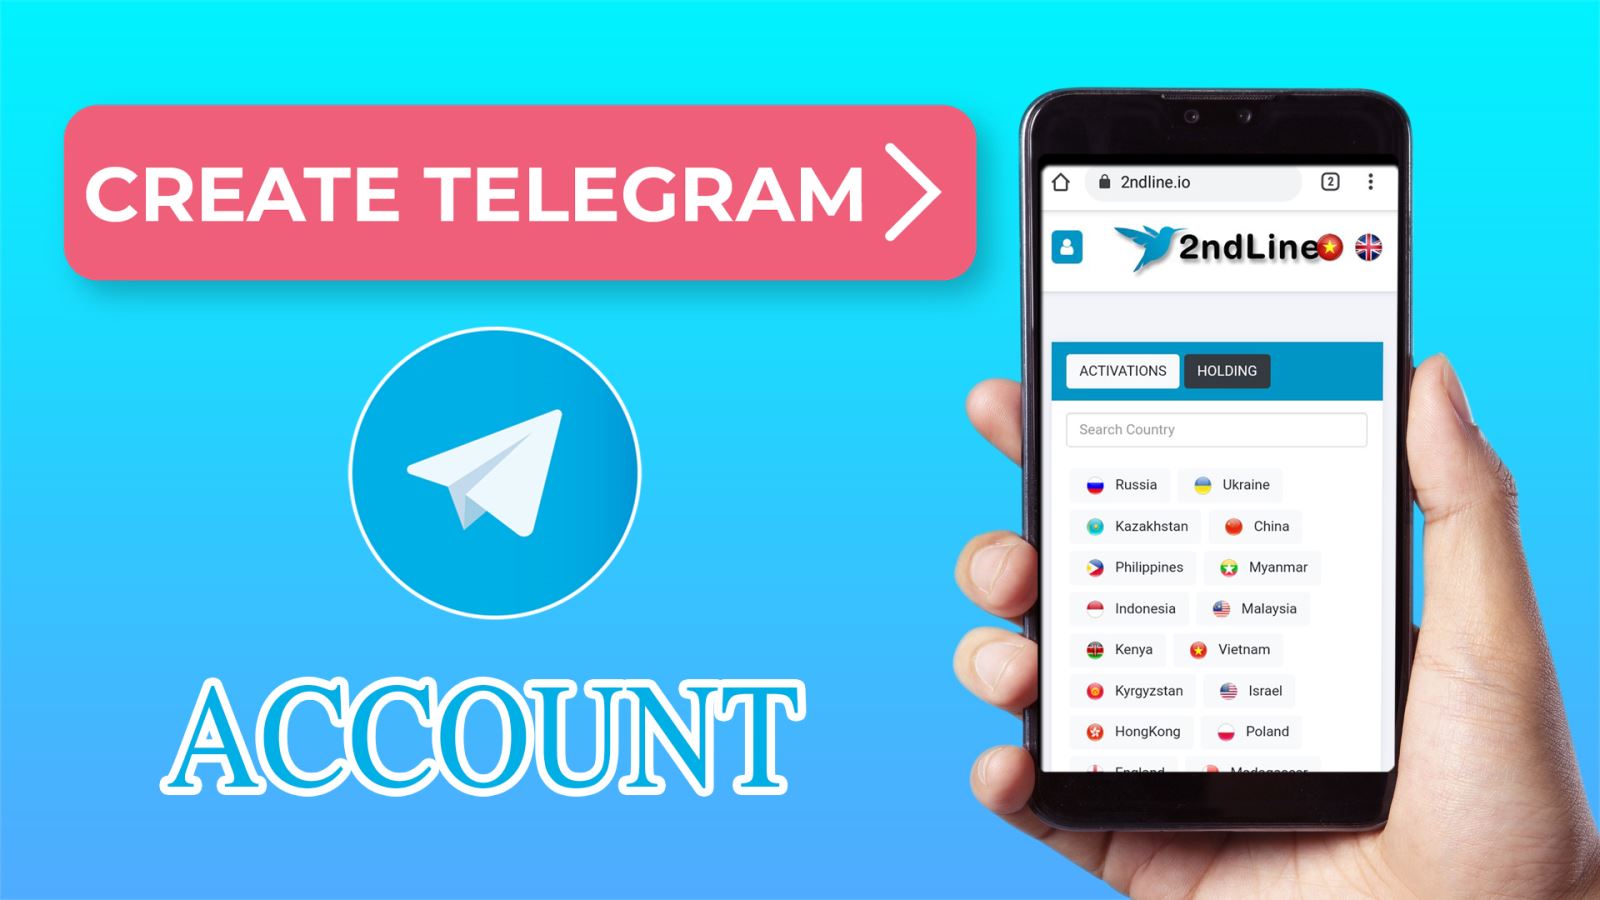 Instructions for registering telegram at 2ndLine.io